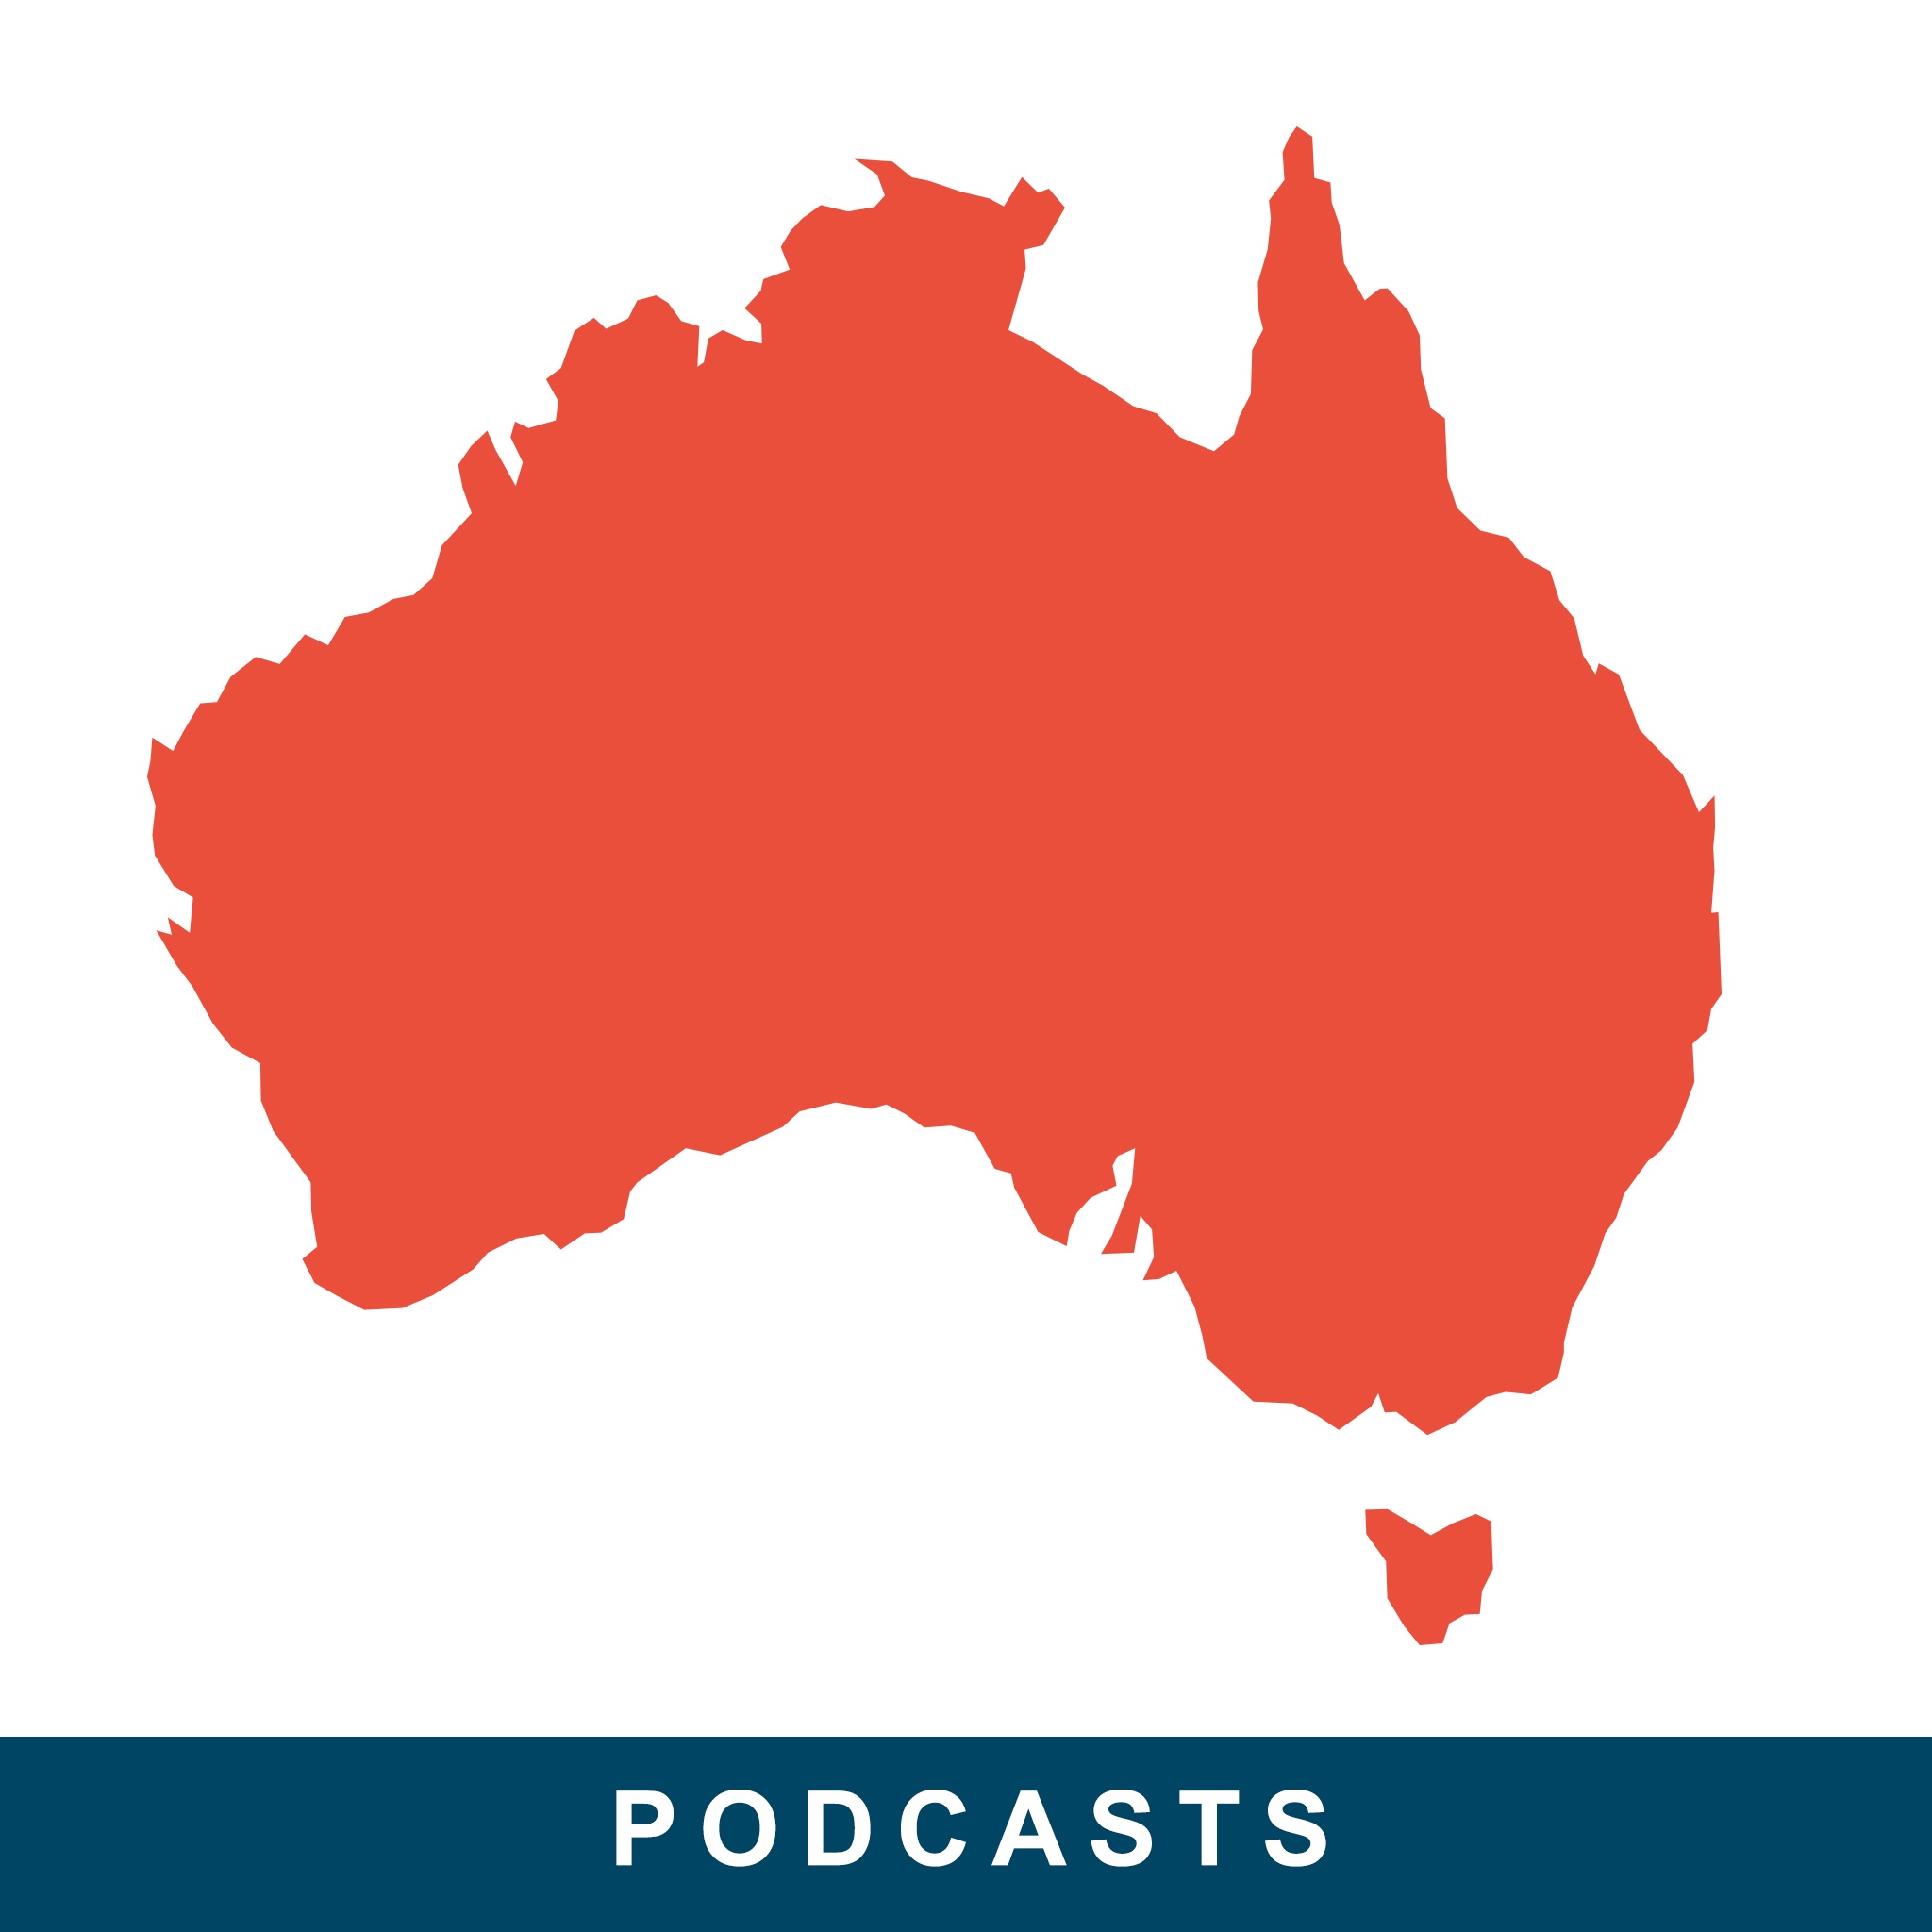 The Australian Podcasts